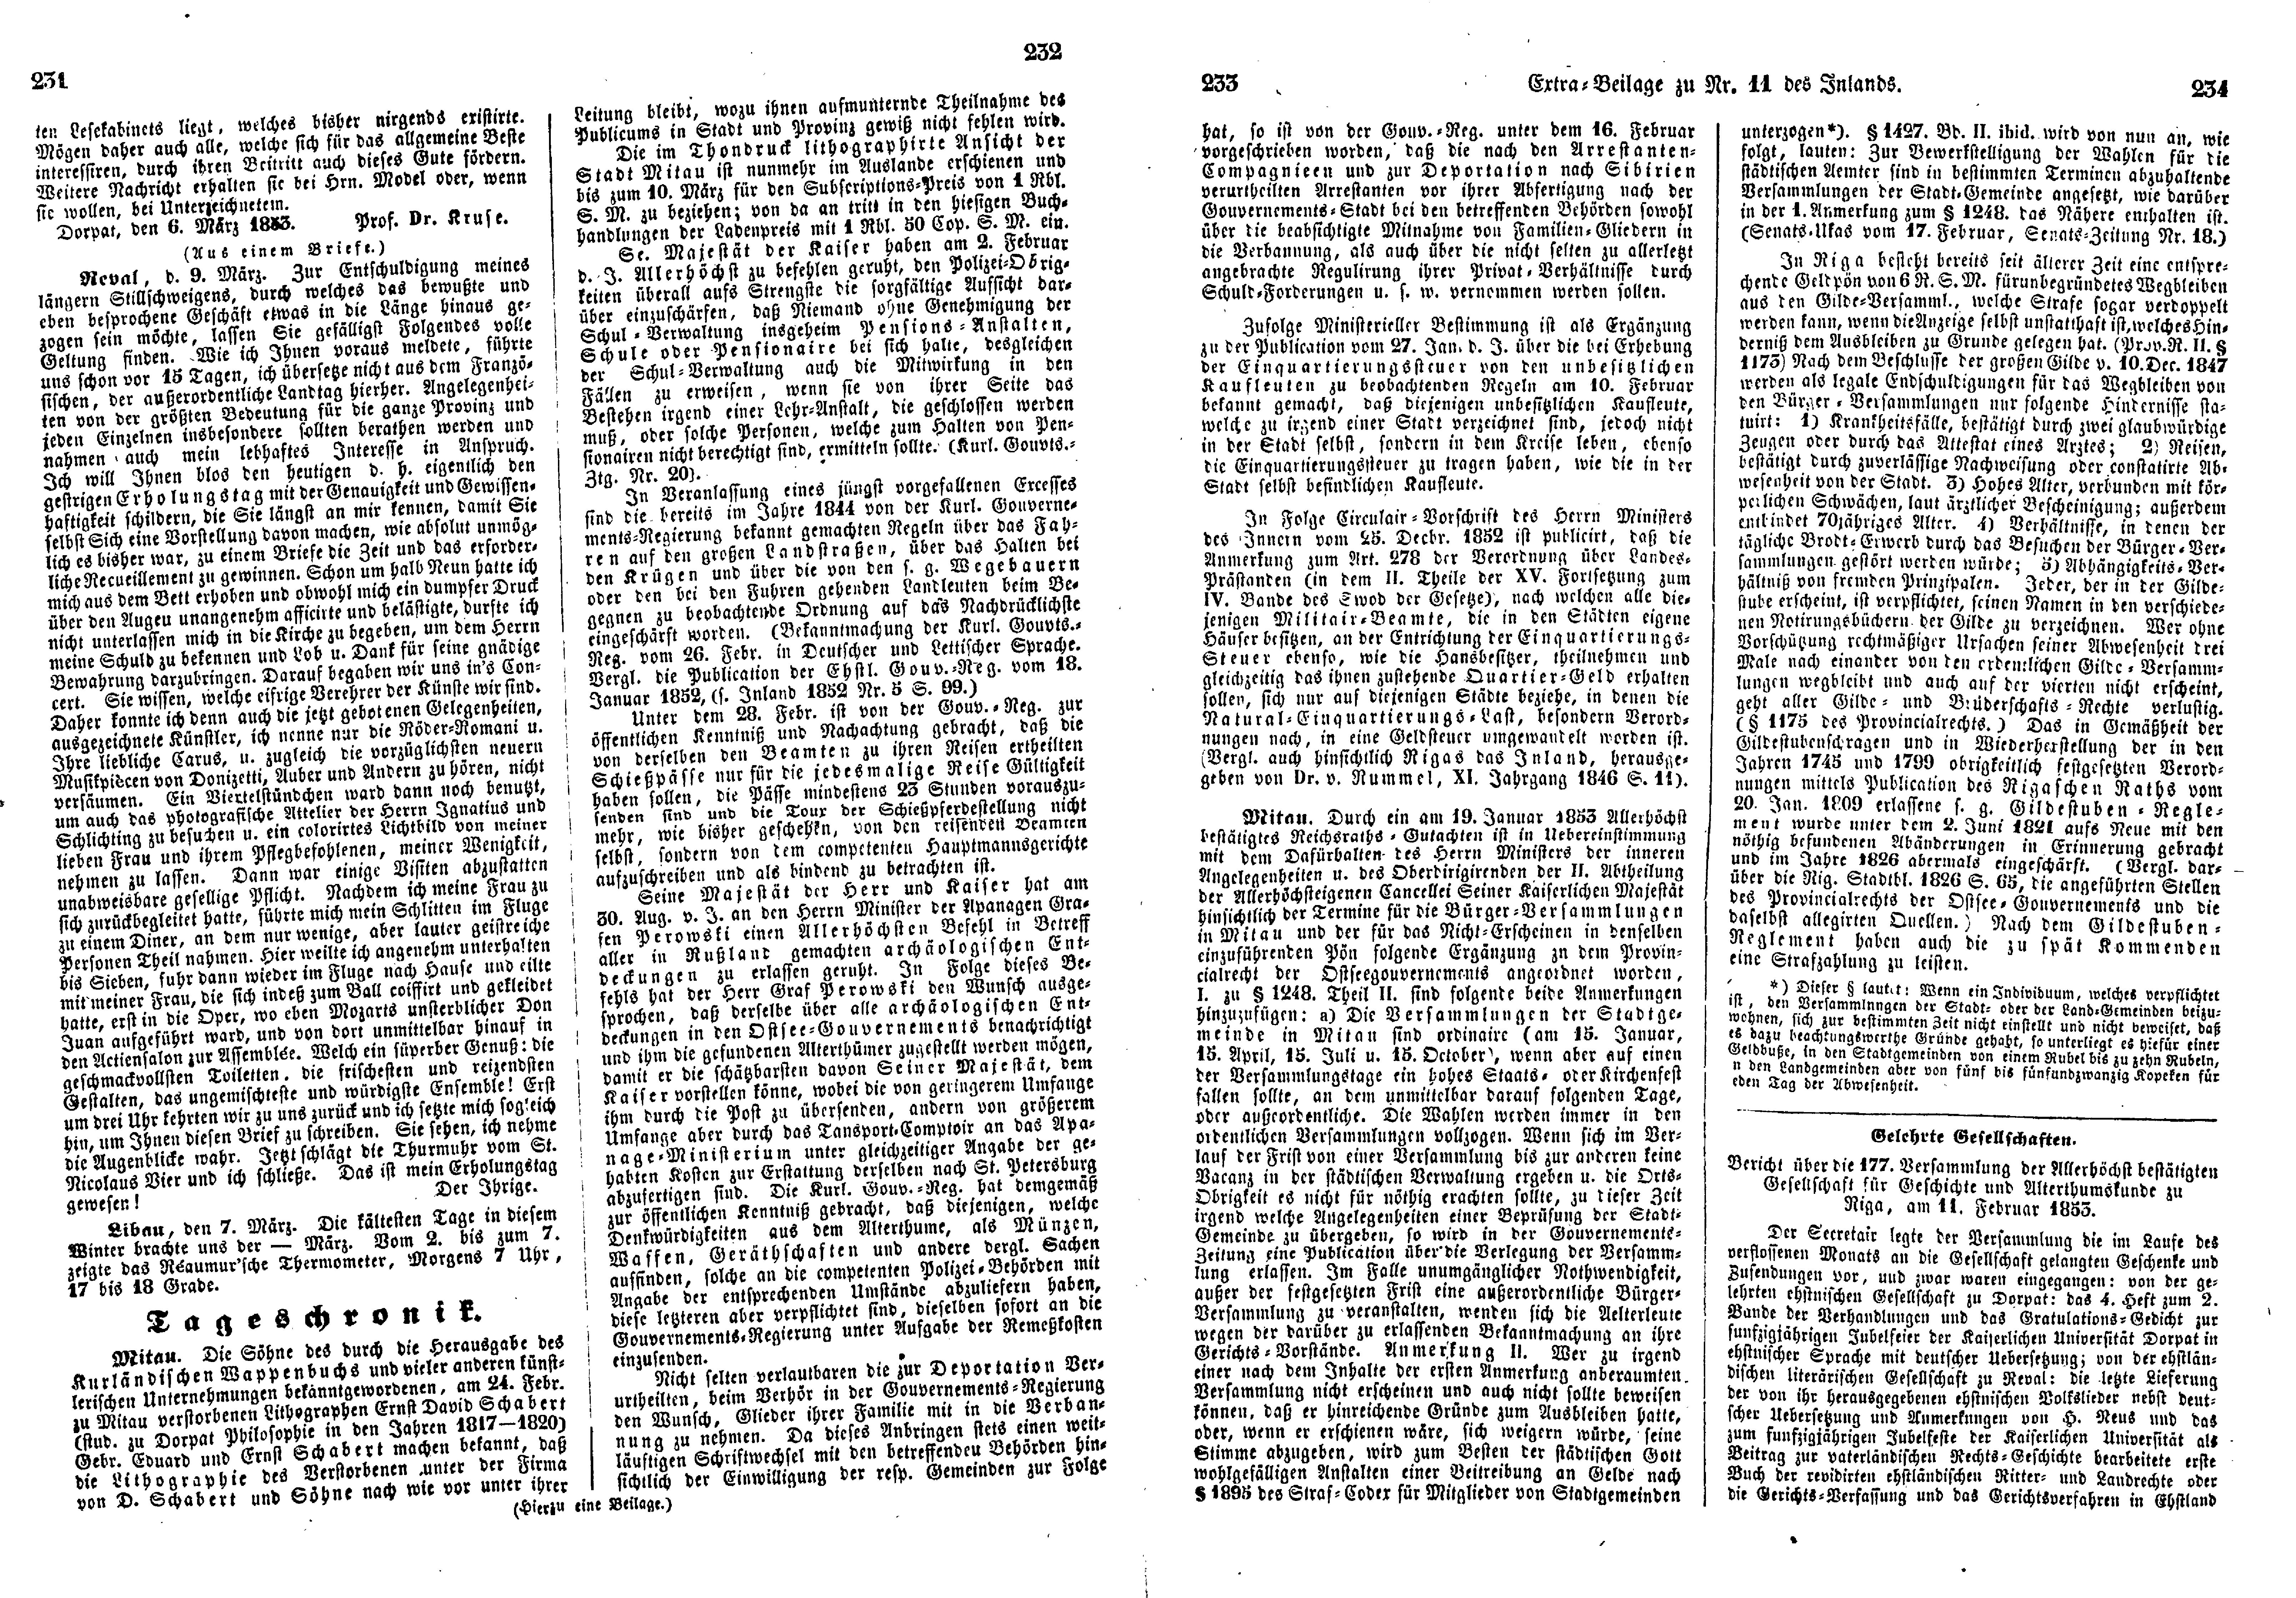 Das Inland [18] (1853) | 68. (231-234) Main body of text